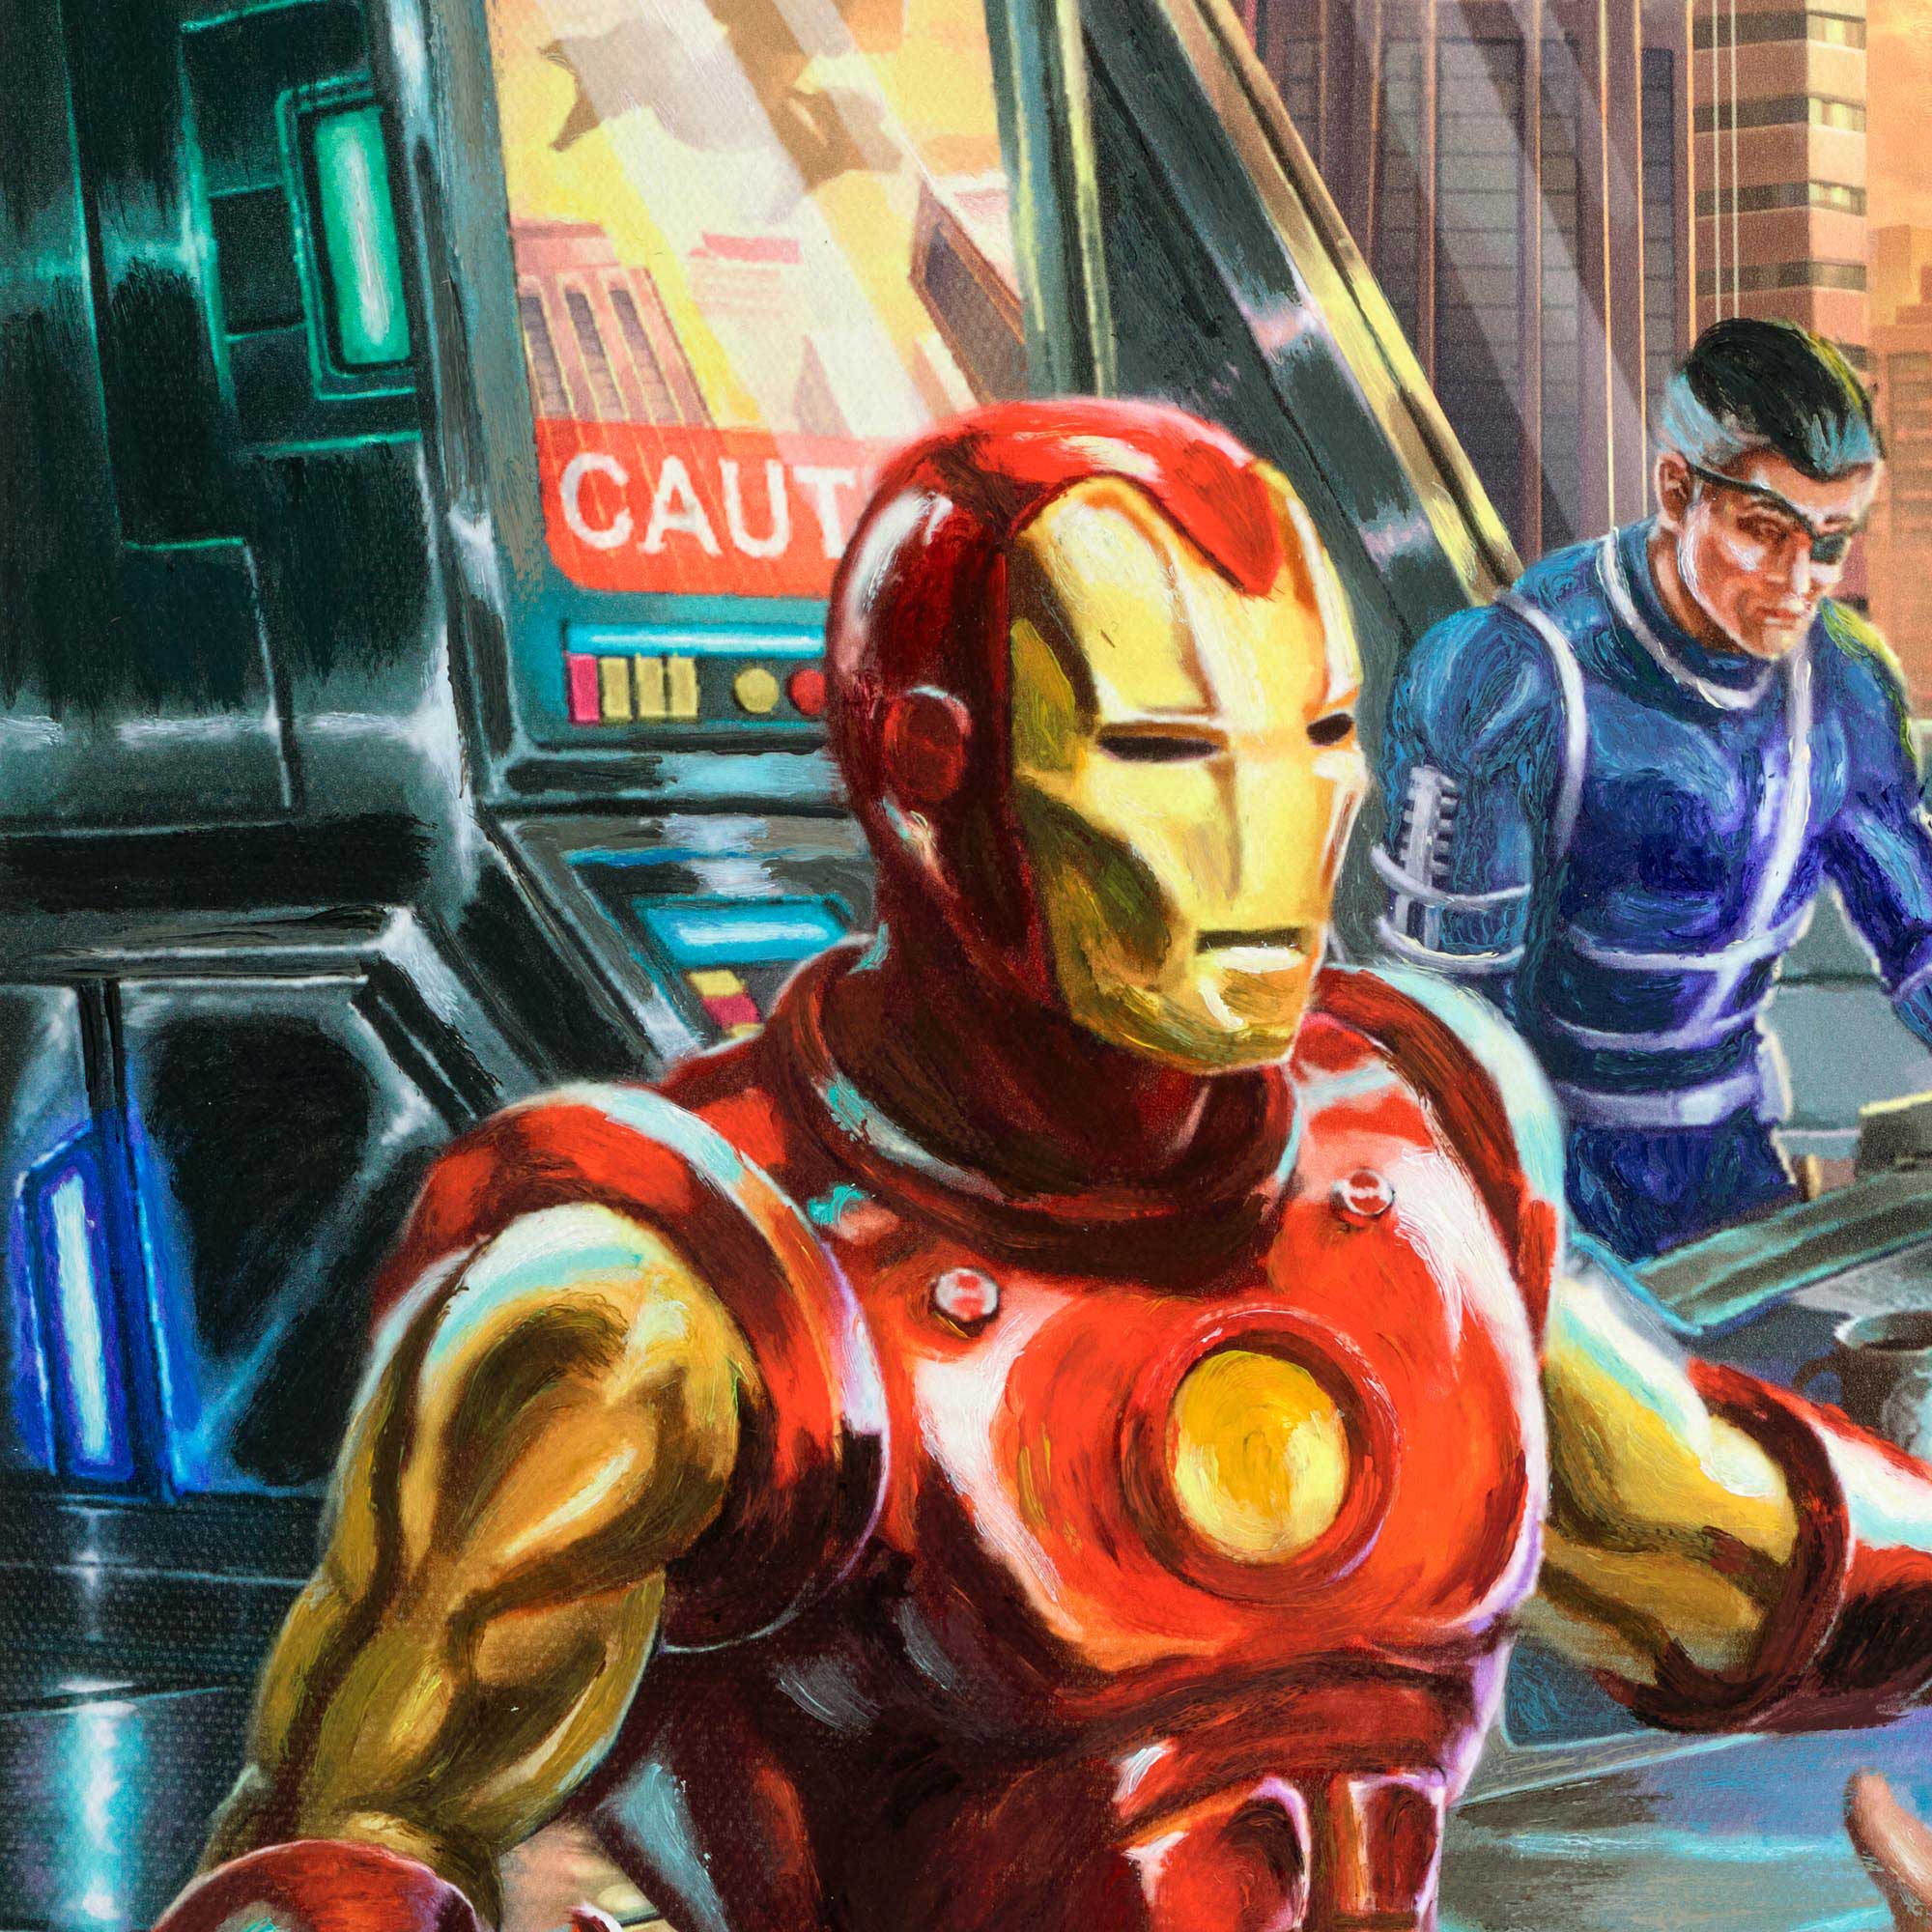 Marvel Superhero Avengers Movie Canvas Painting Comics Iron Man